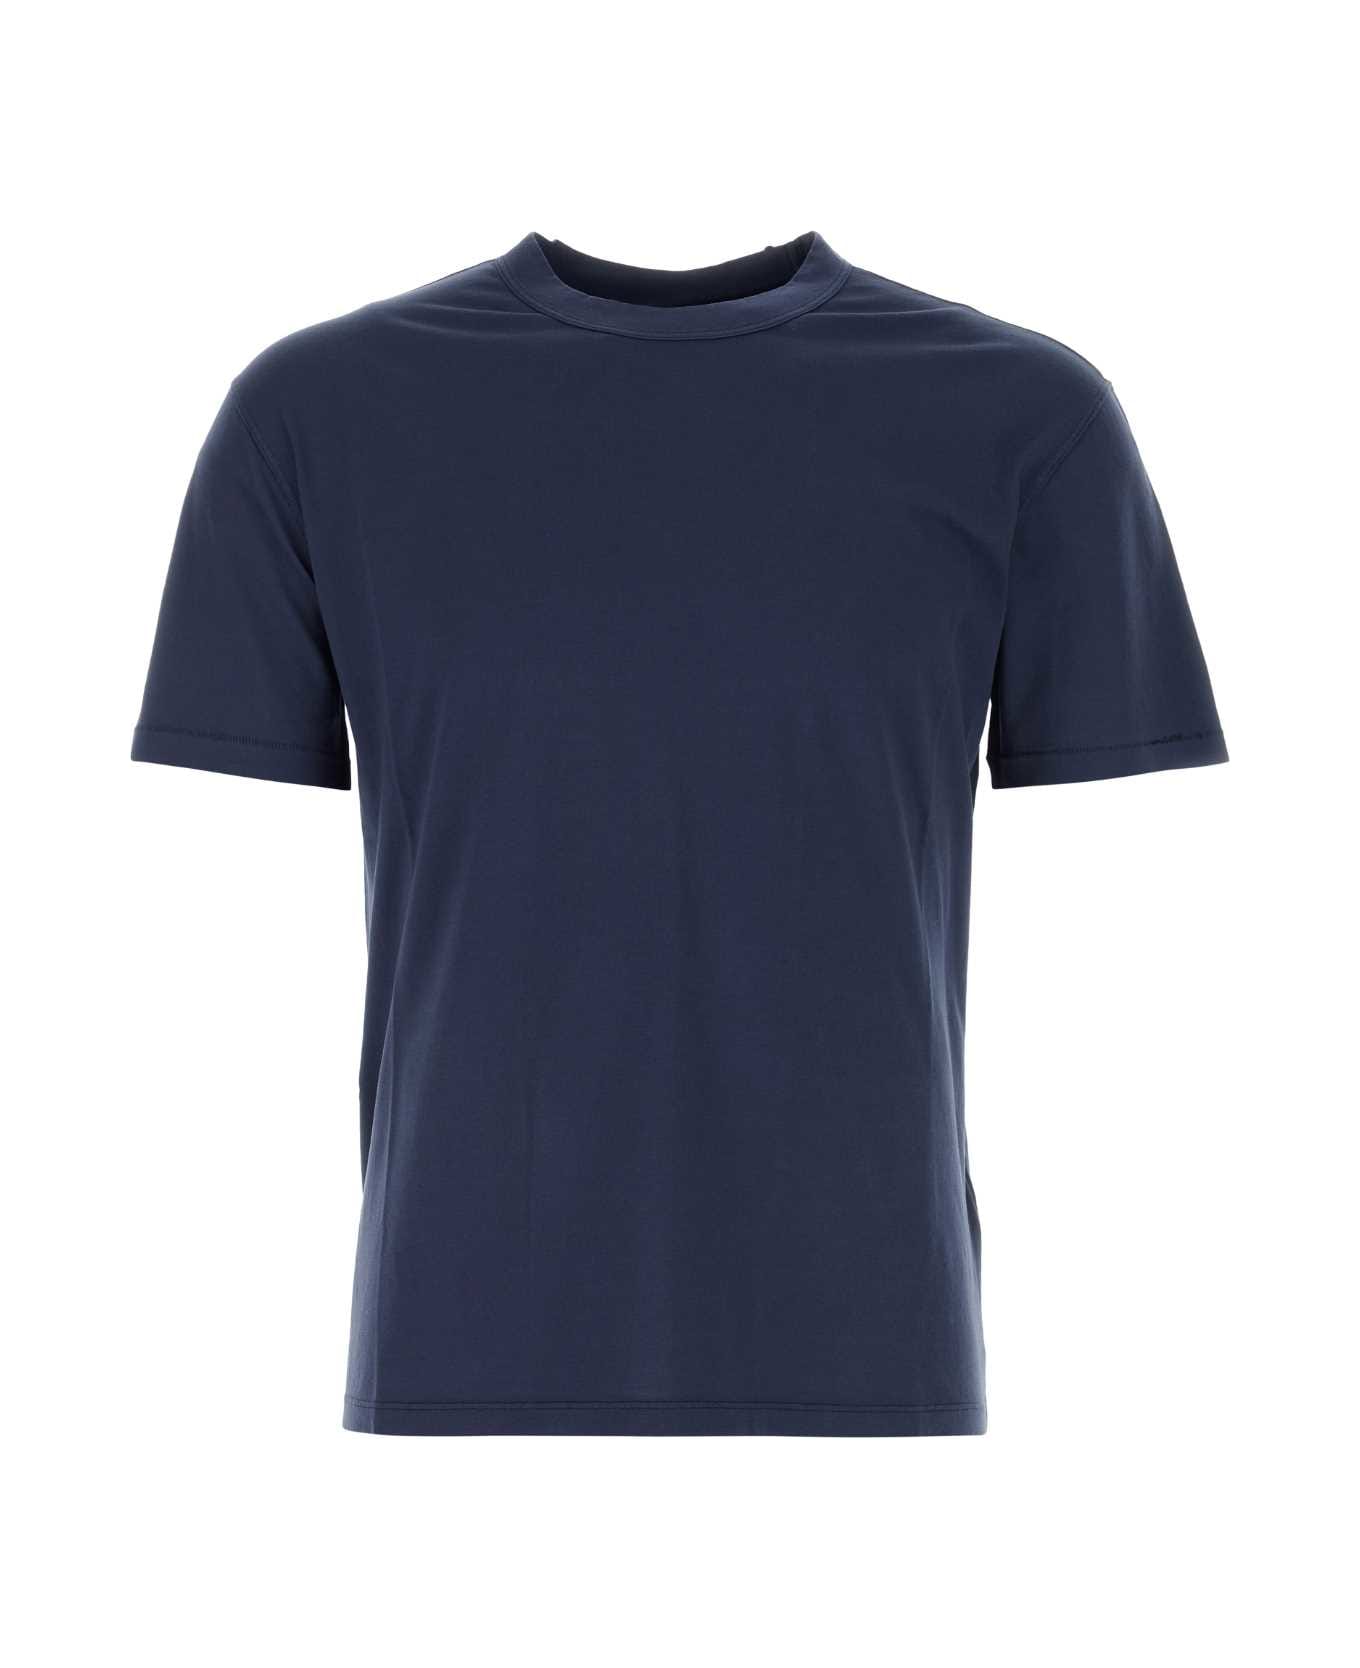 Ten C Navy Blue Cotton T-shirt - BLUNOTTE シャツ